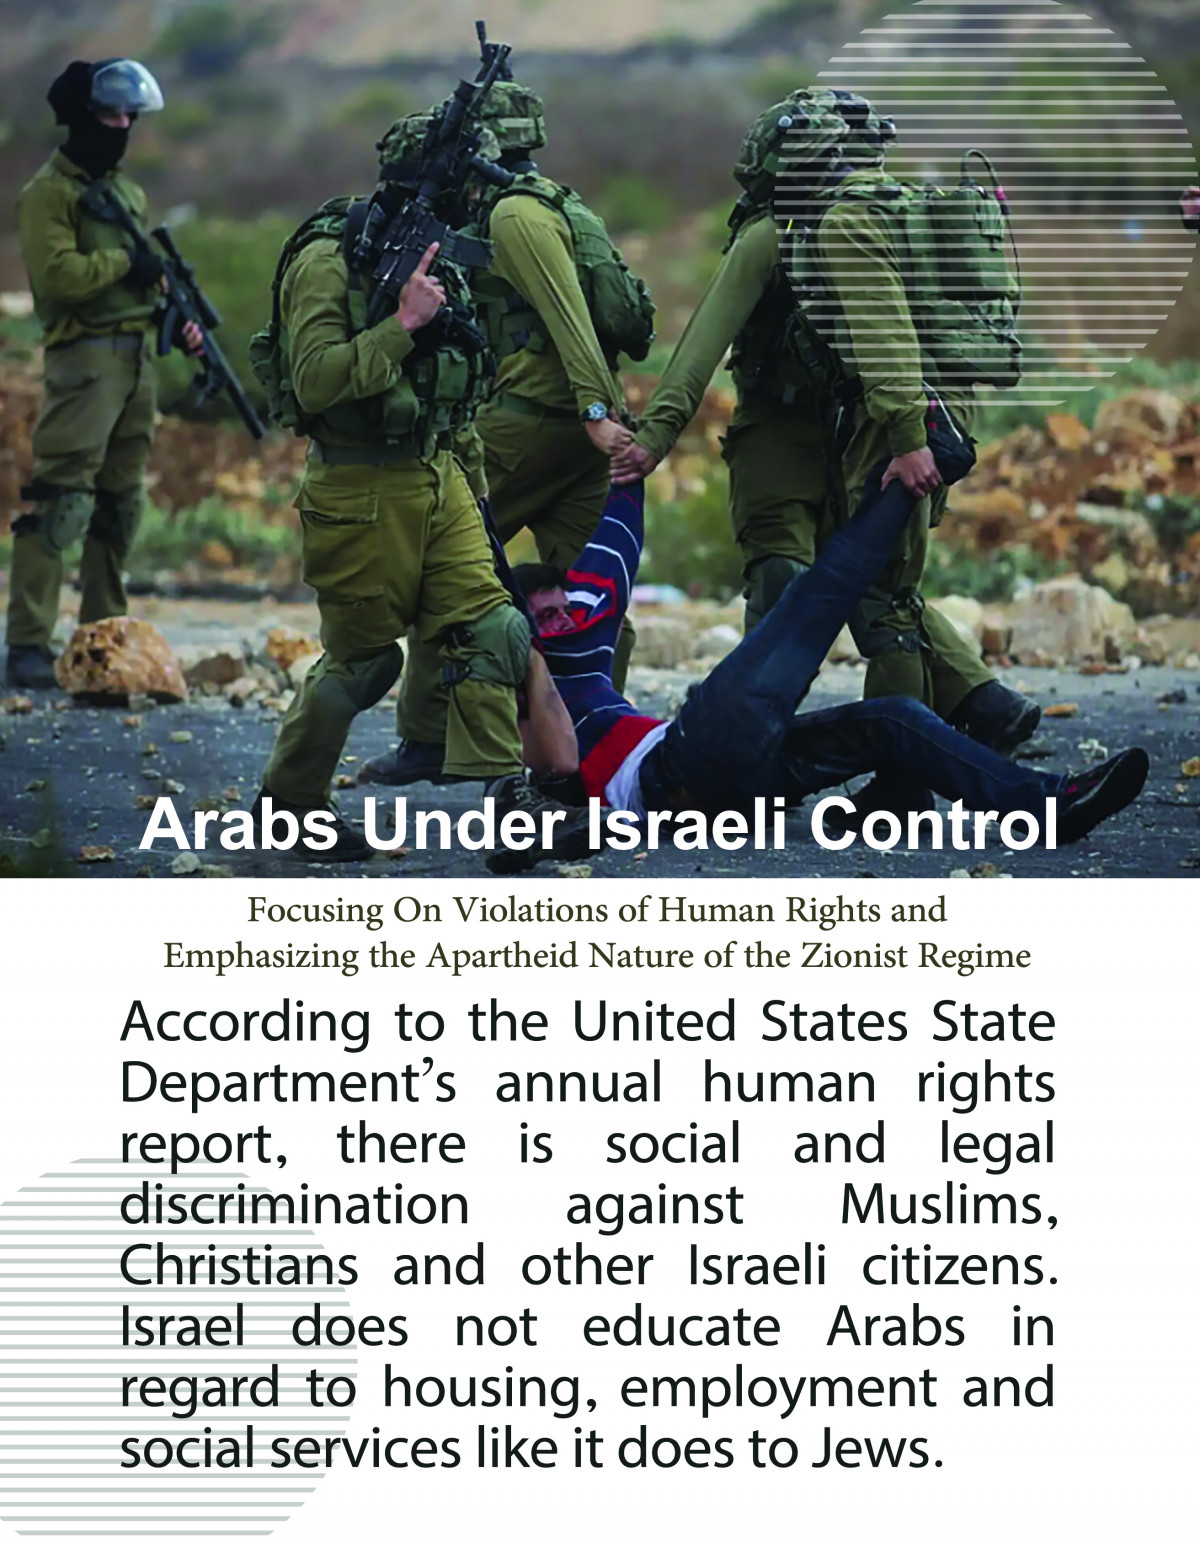 Arabs under Israeli control